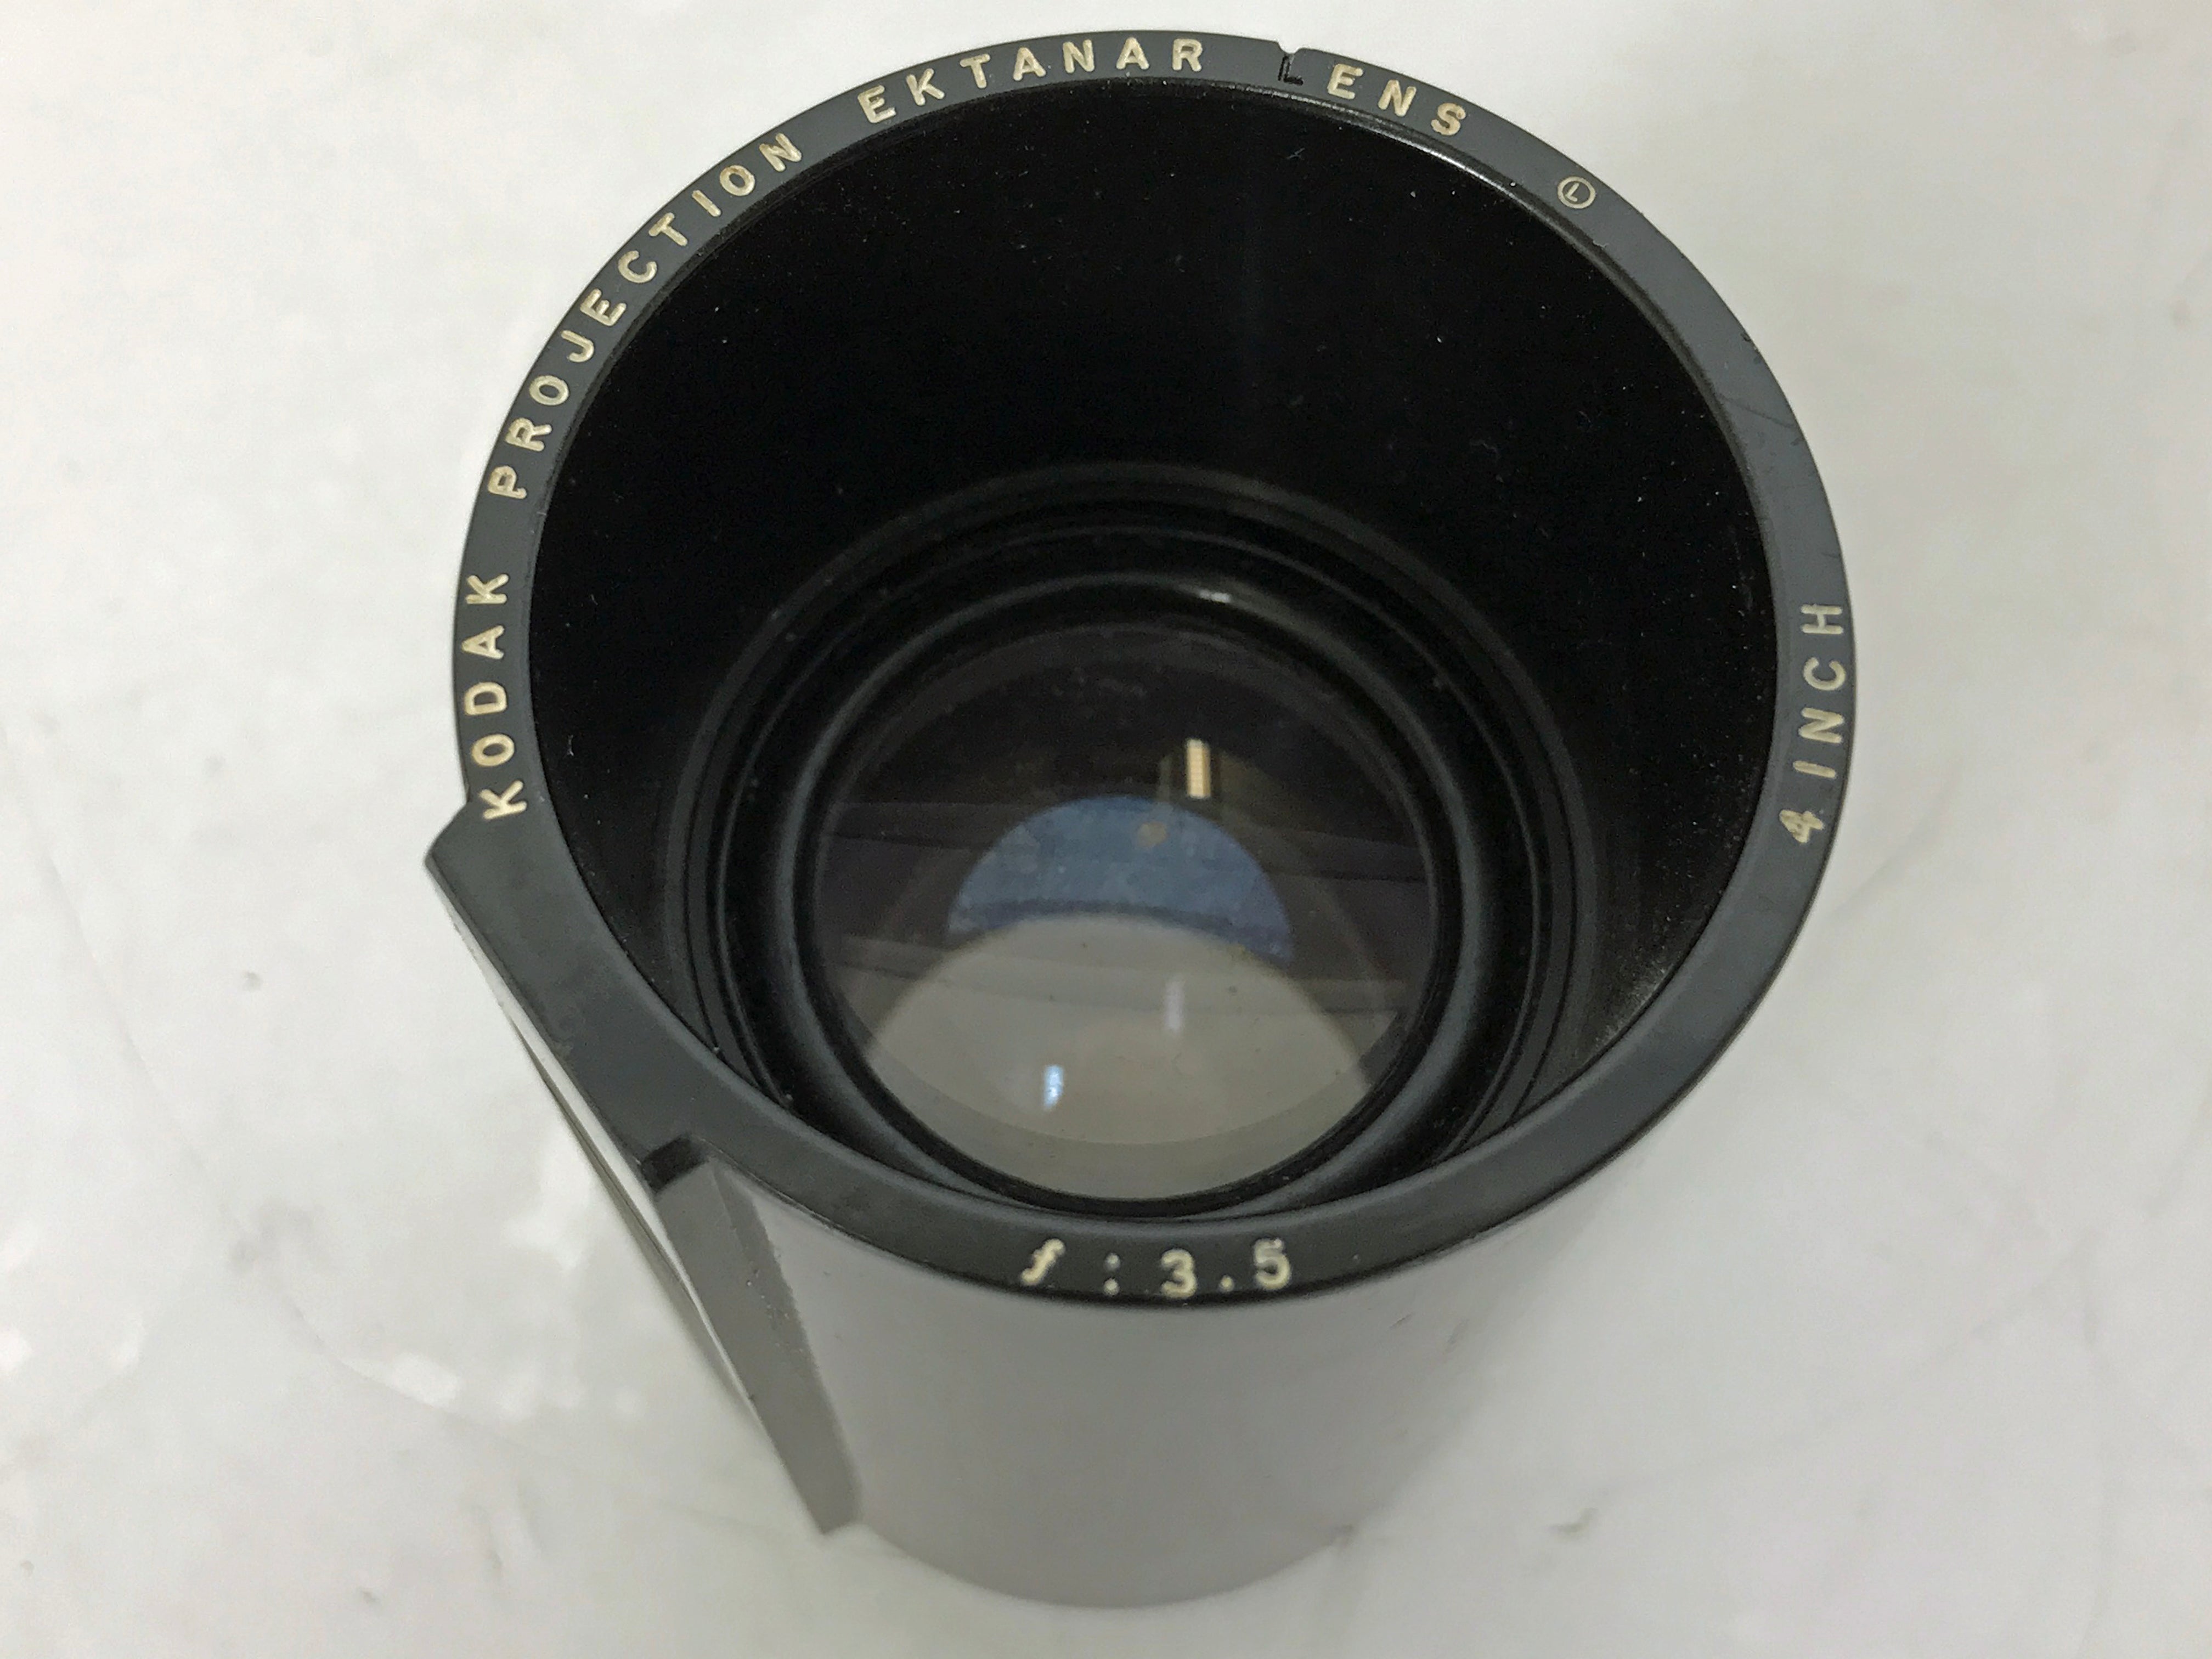 Kodak Projection Ektanar f/3.5 4" Projection Lens